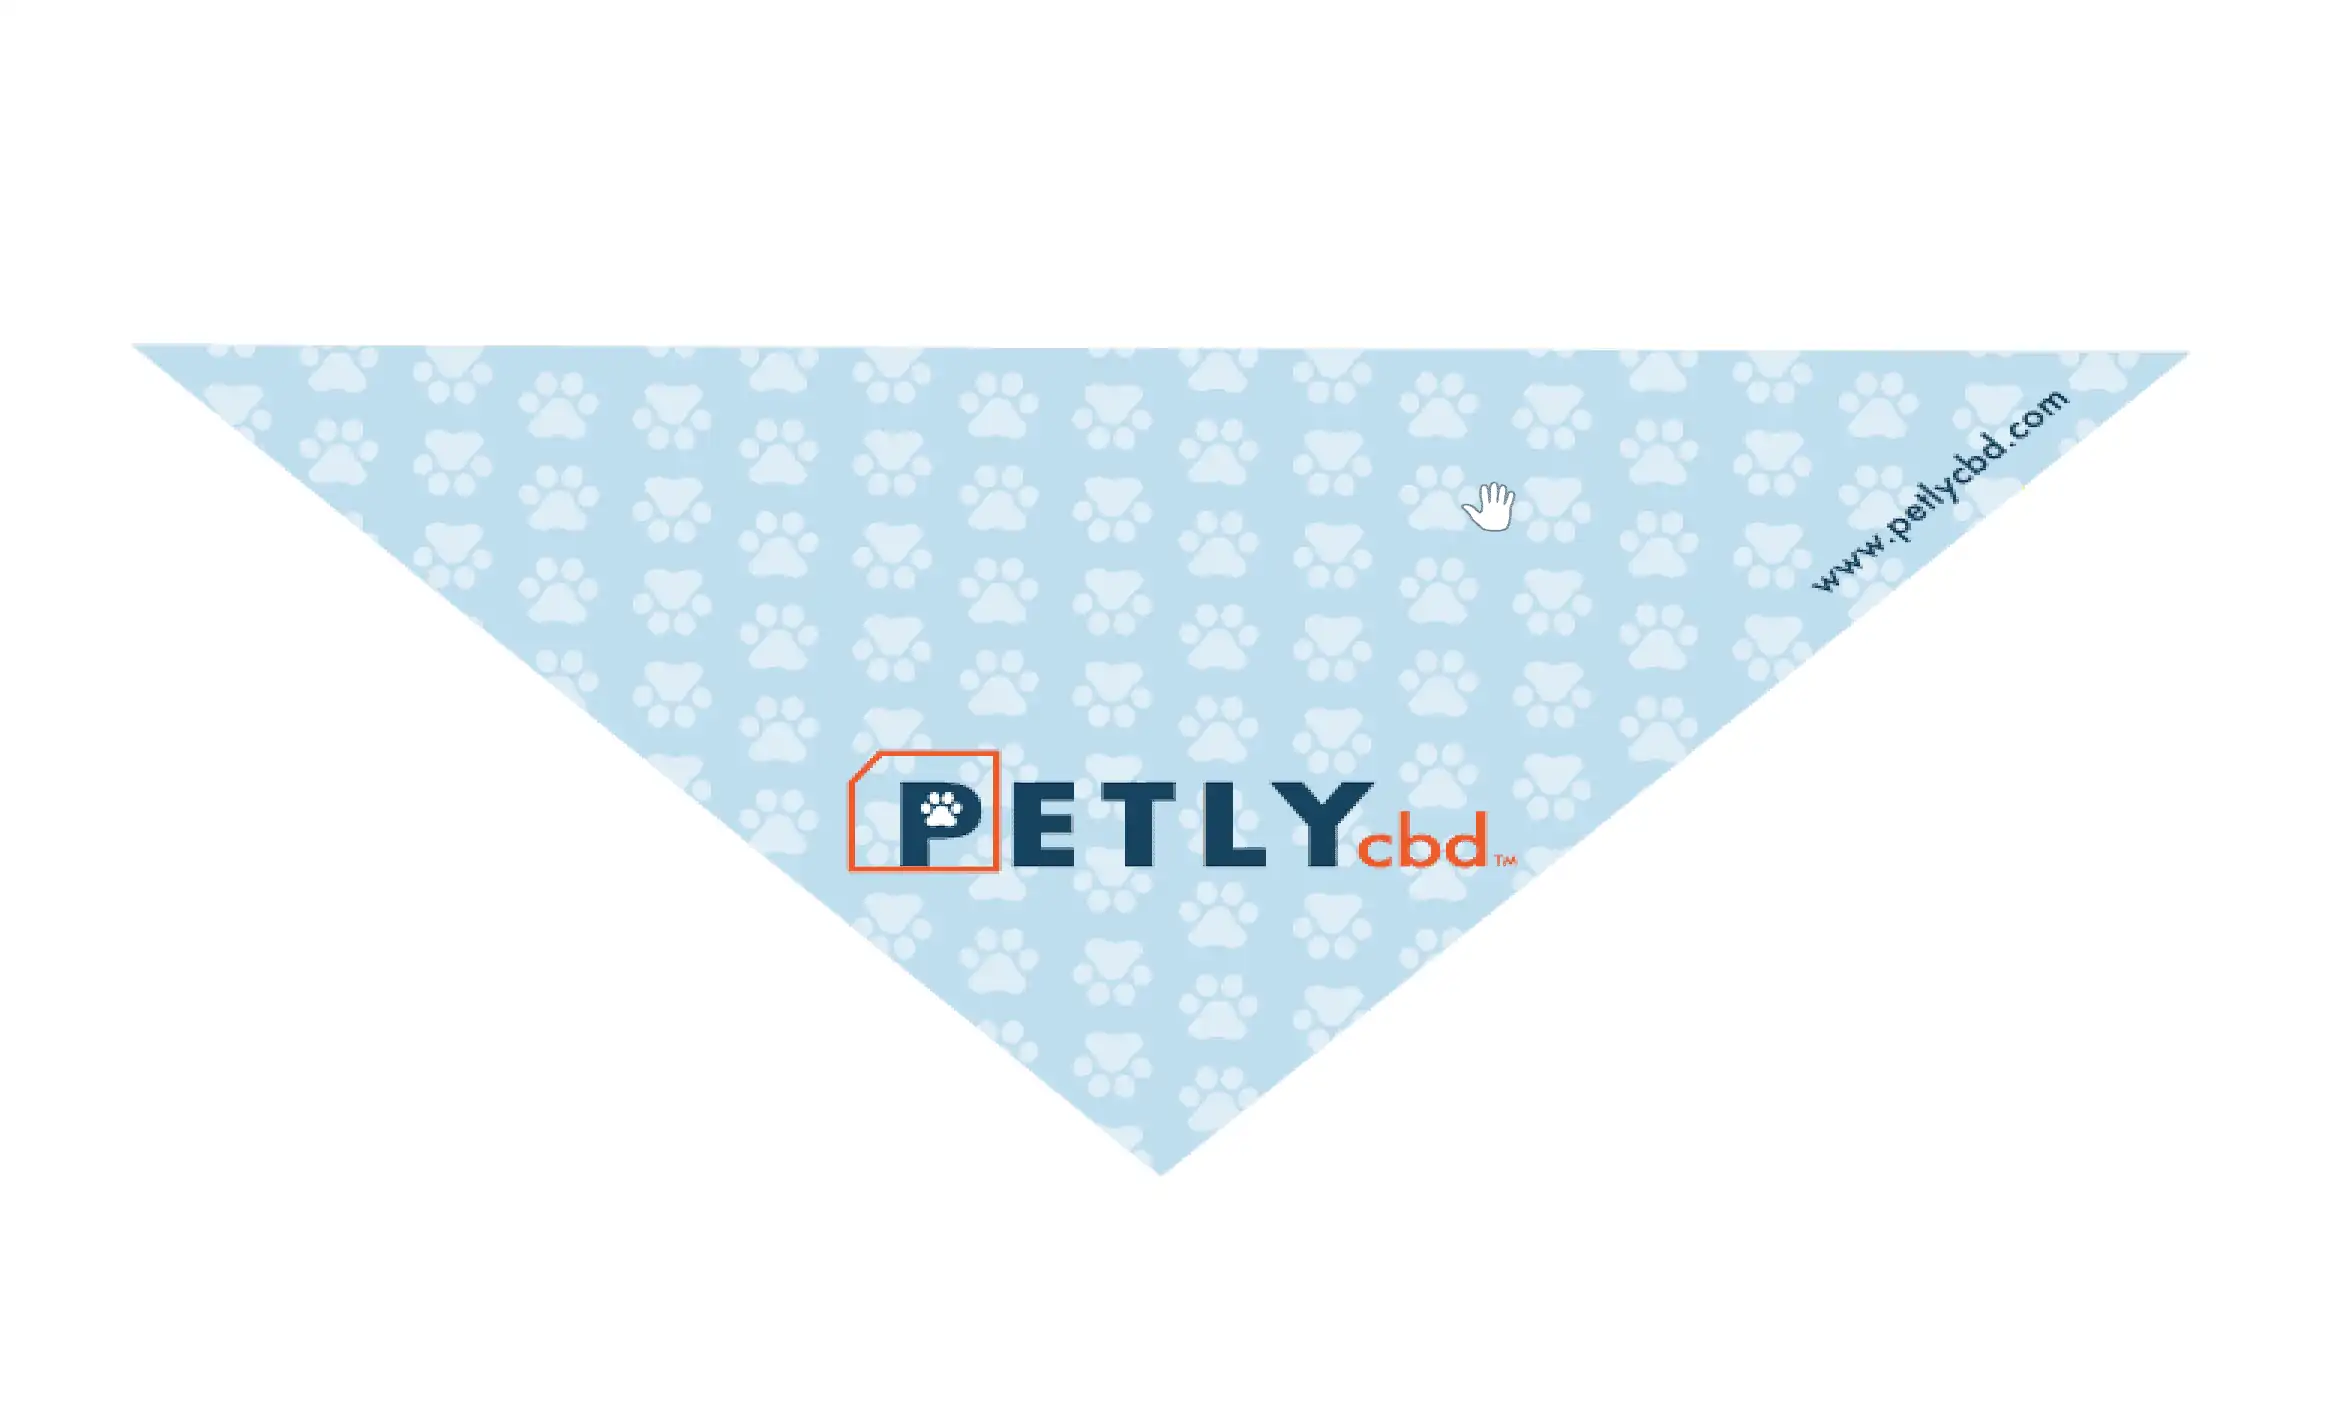 Petly CBD Review and Coupon